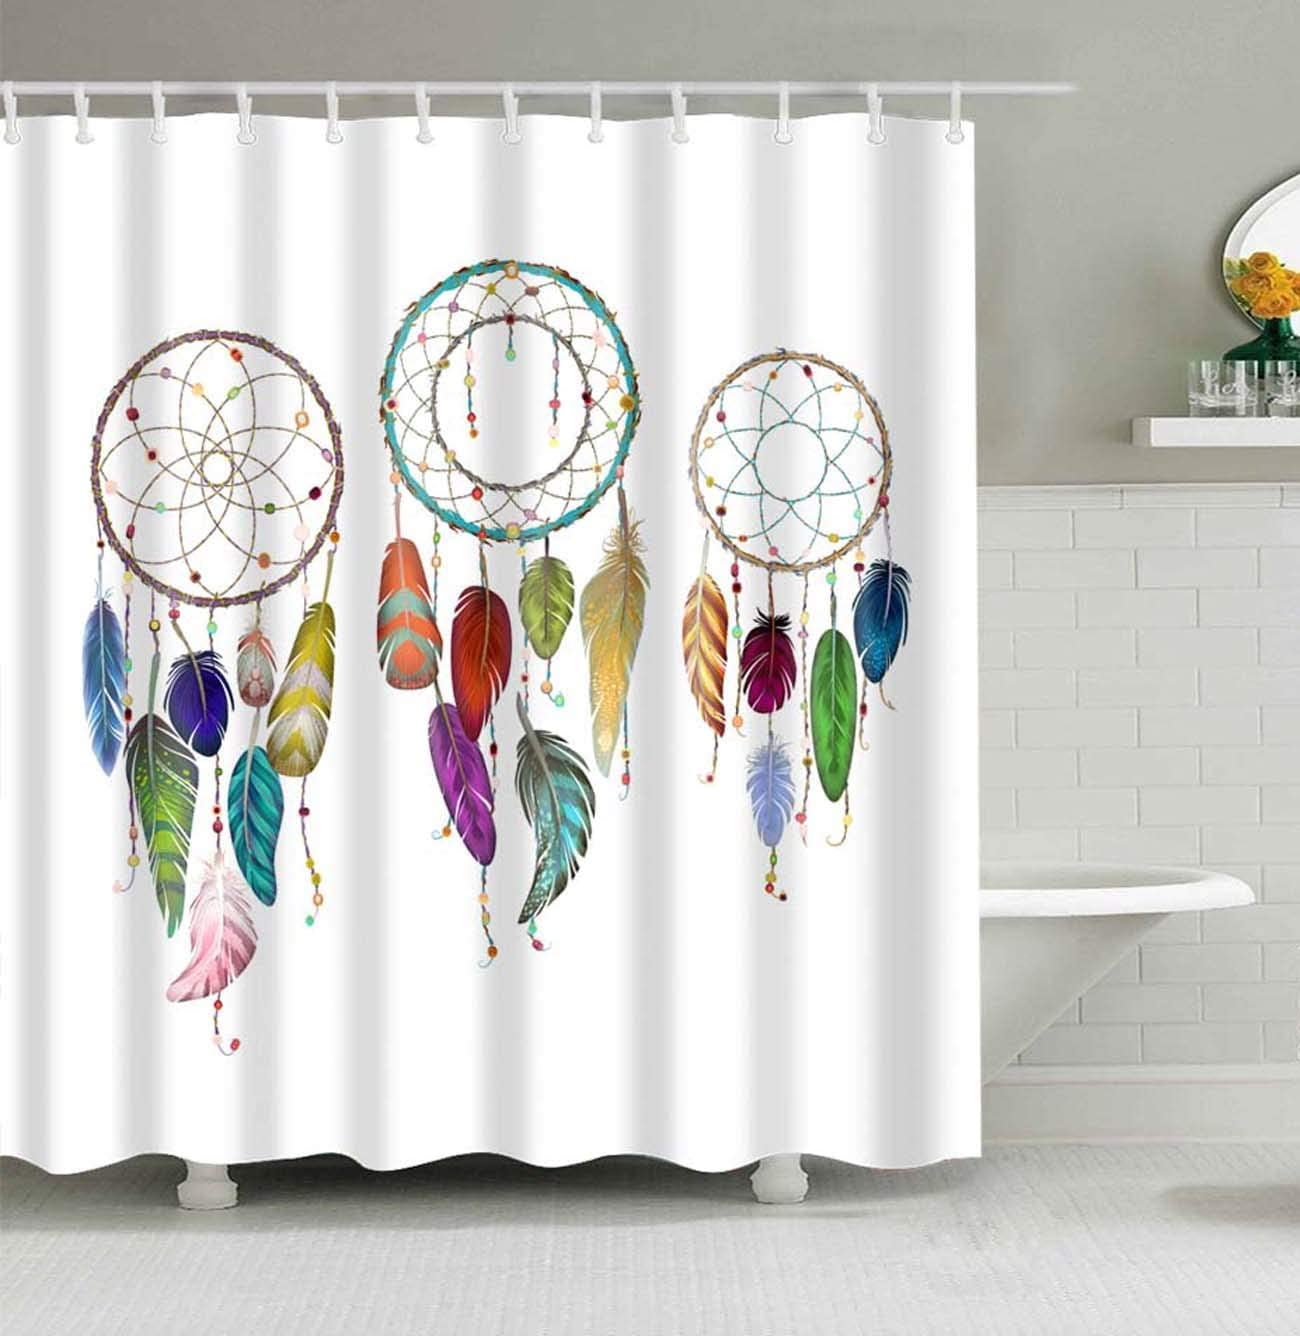 Dream Catcher Shower Curtain Bathroom Curtains Waterproof Fabric Accessories 